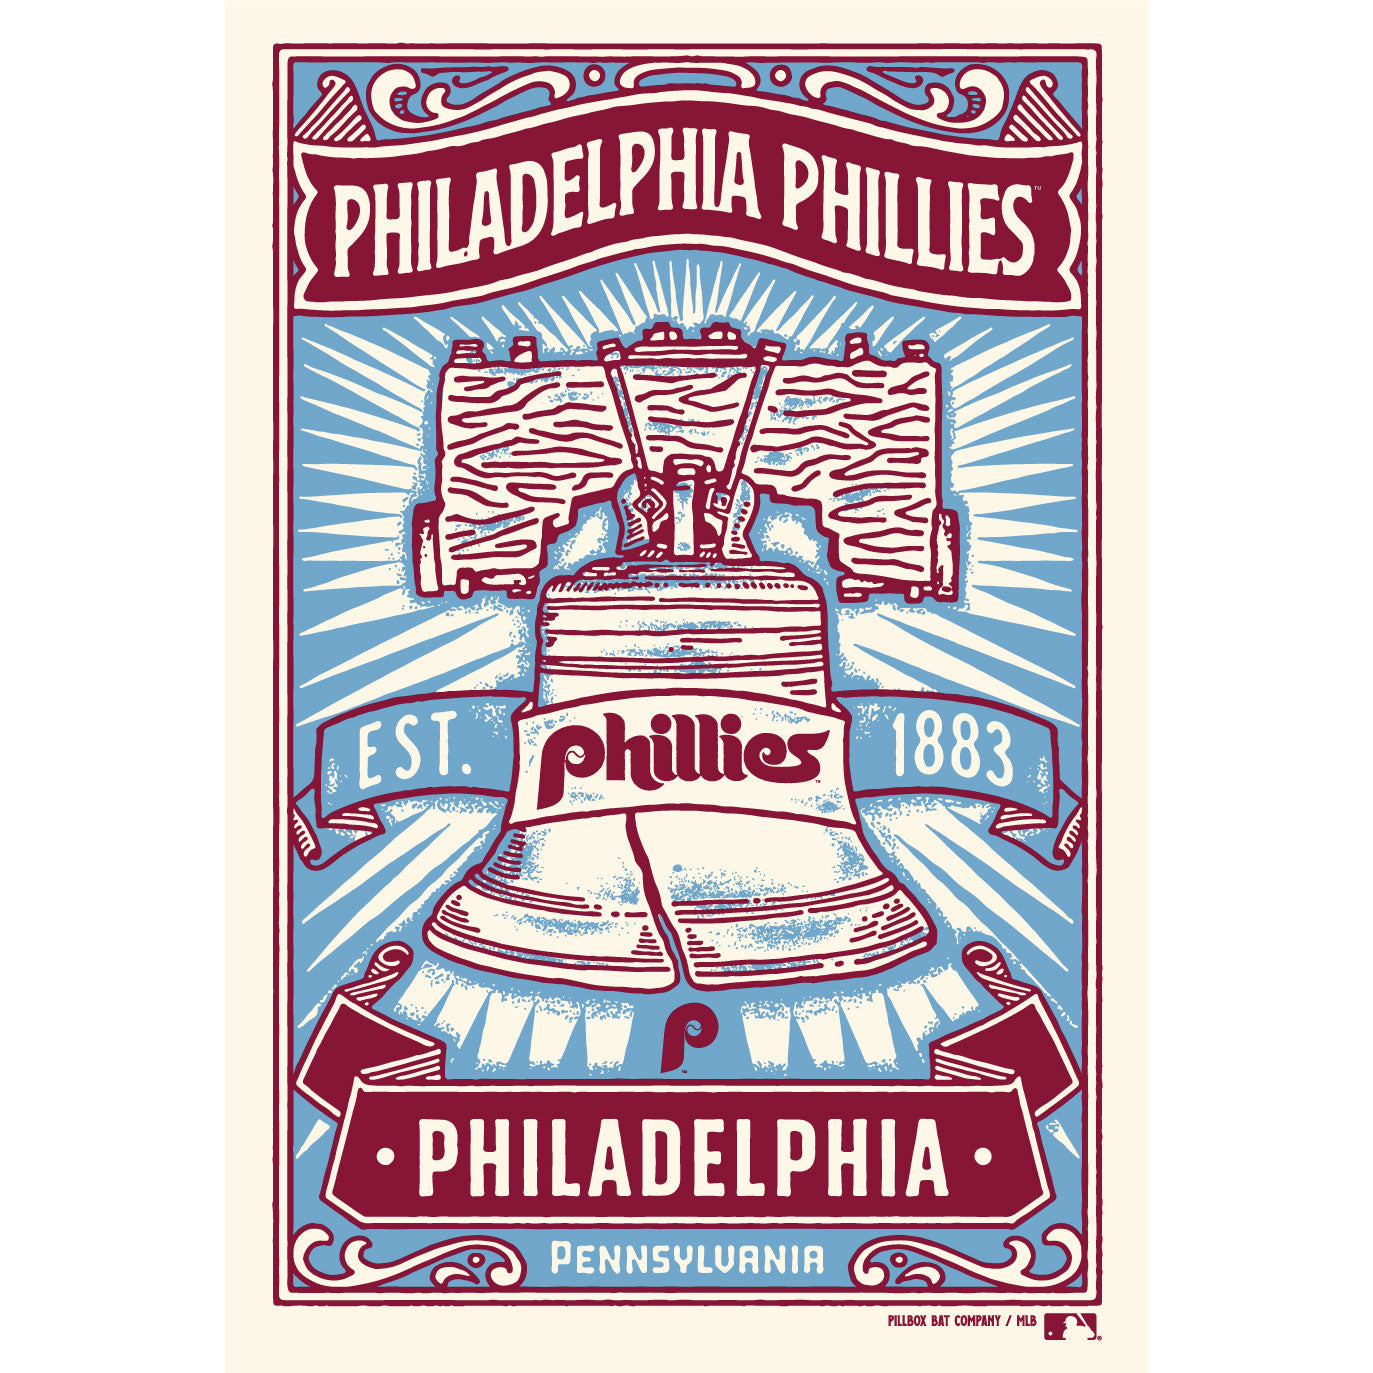 phillies wallpaper  Phillies, Philadelphia phillies, Philadelphia